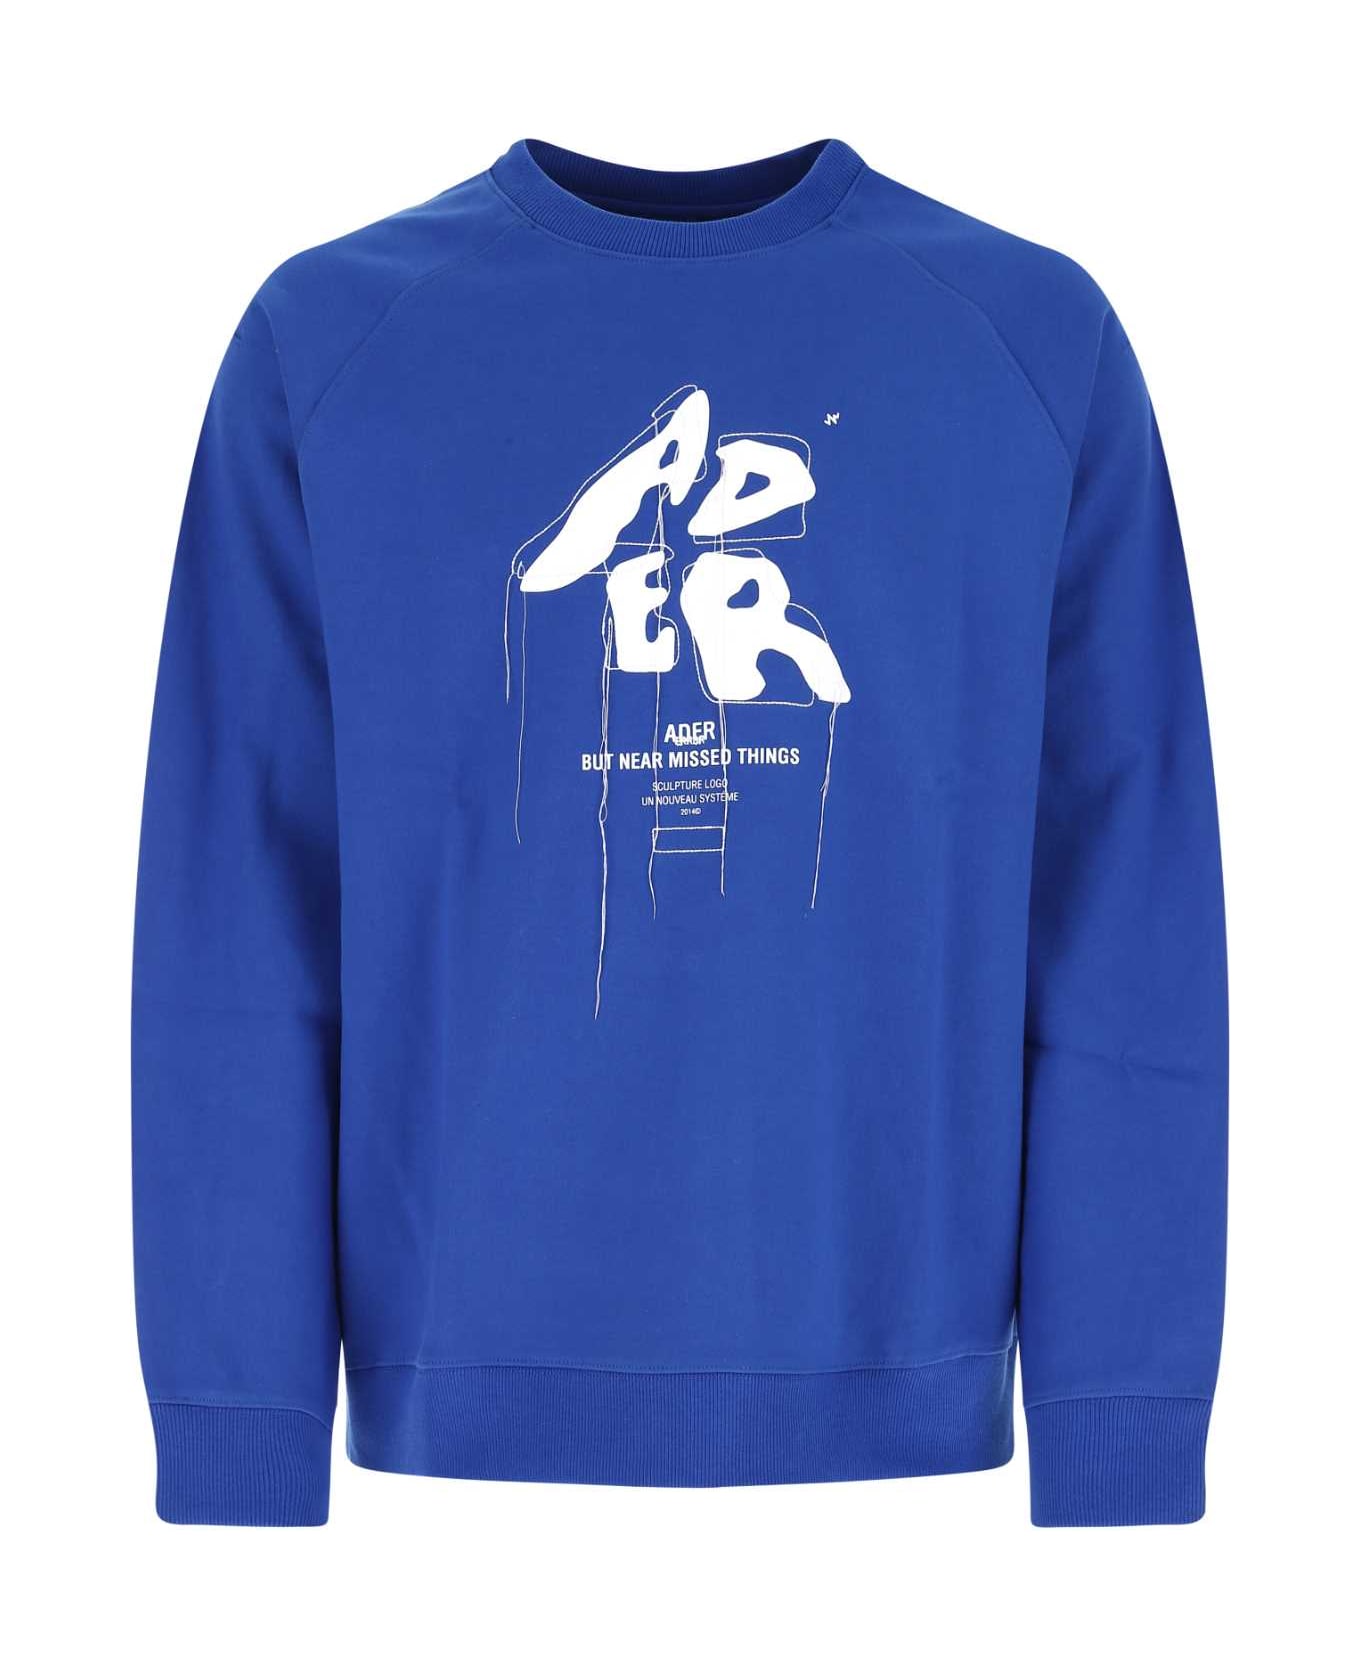 Ader Error Electric Blue Cotton Blend Sweatshirt - BLUE